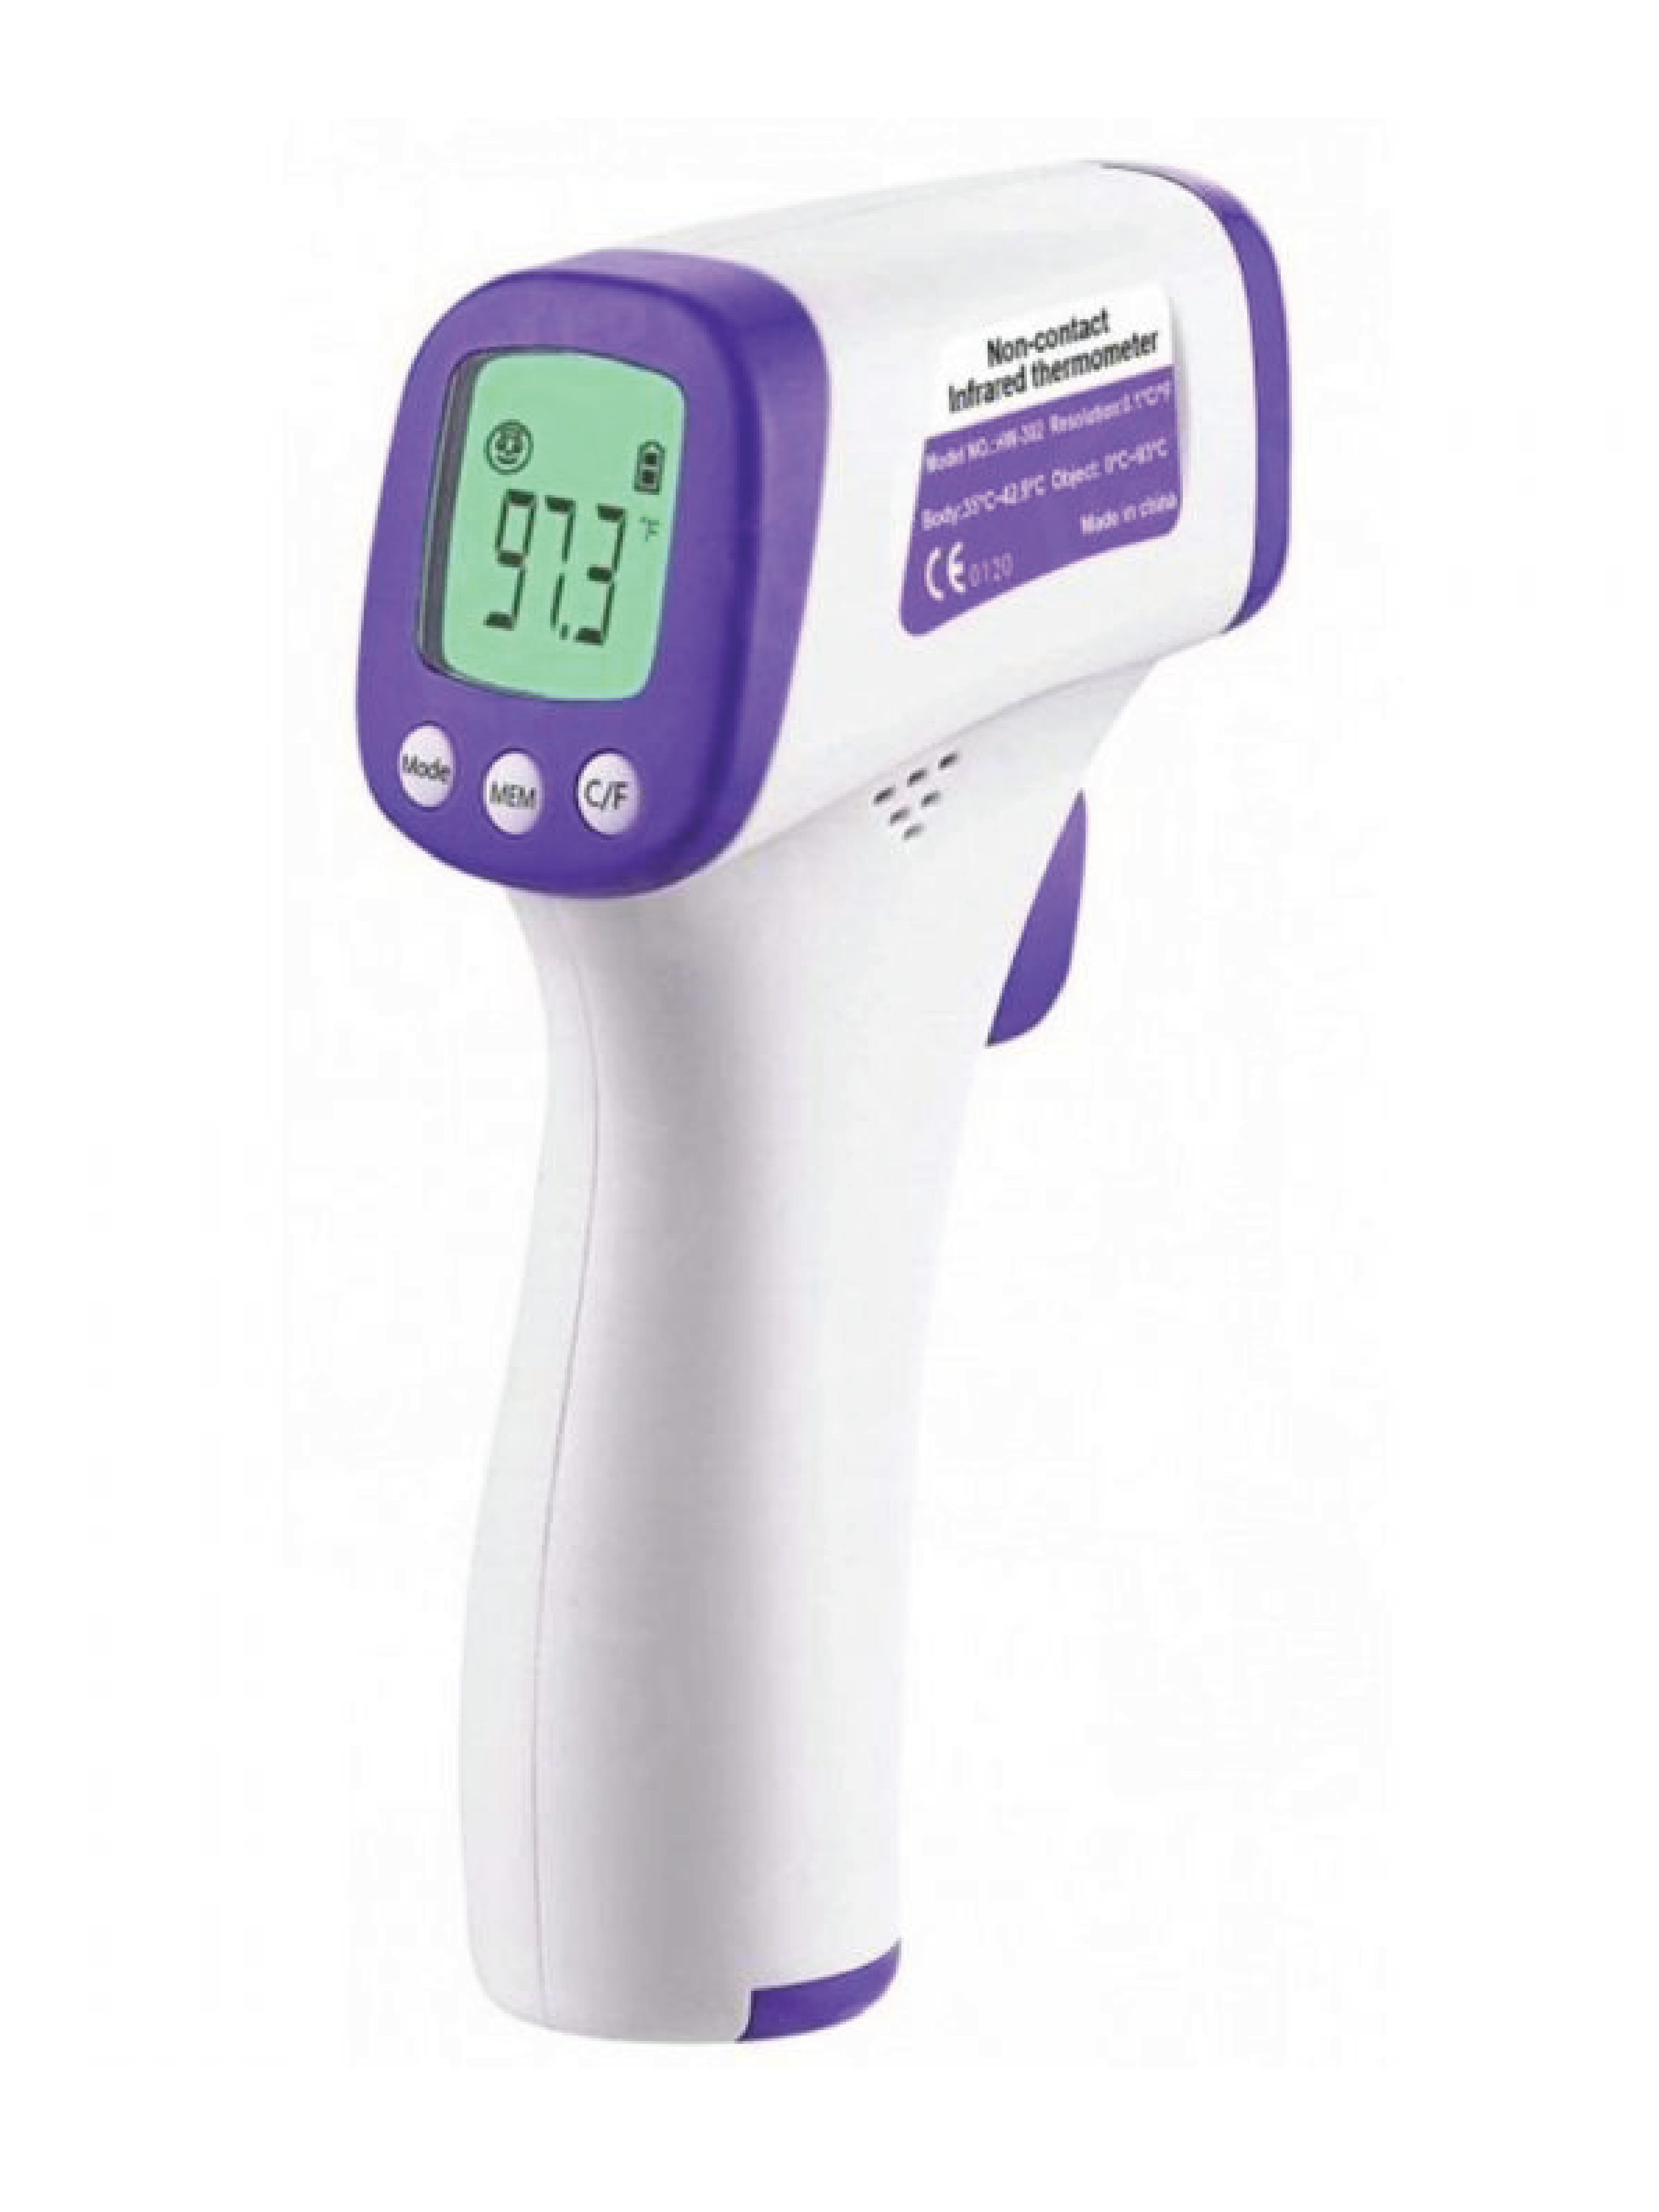 HW-F7 pannetermometer, 1 stk